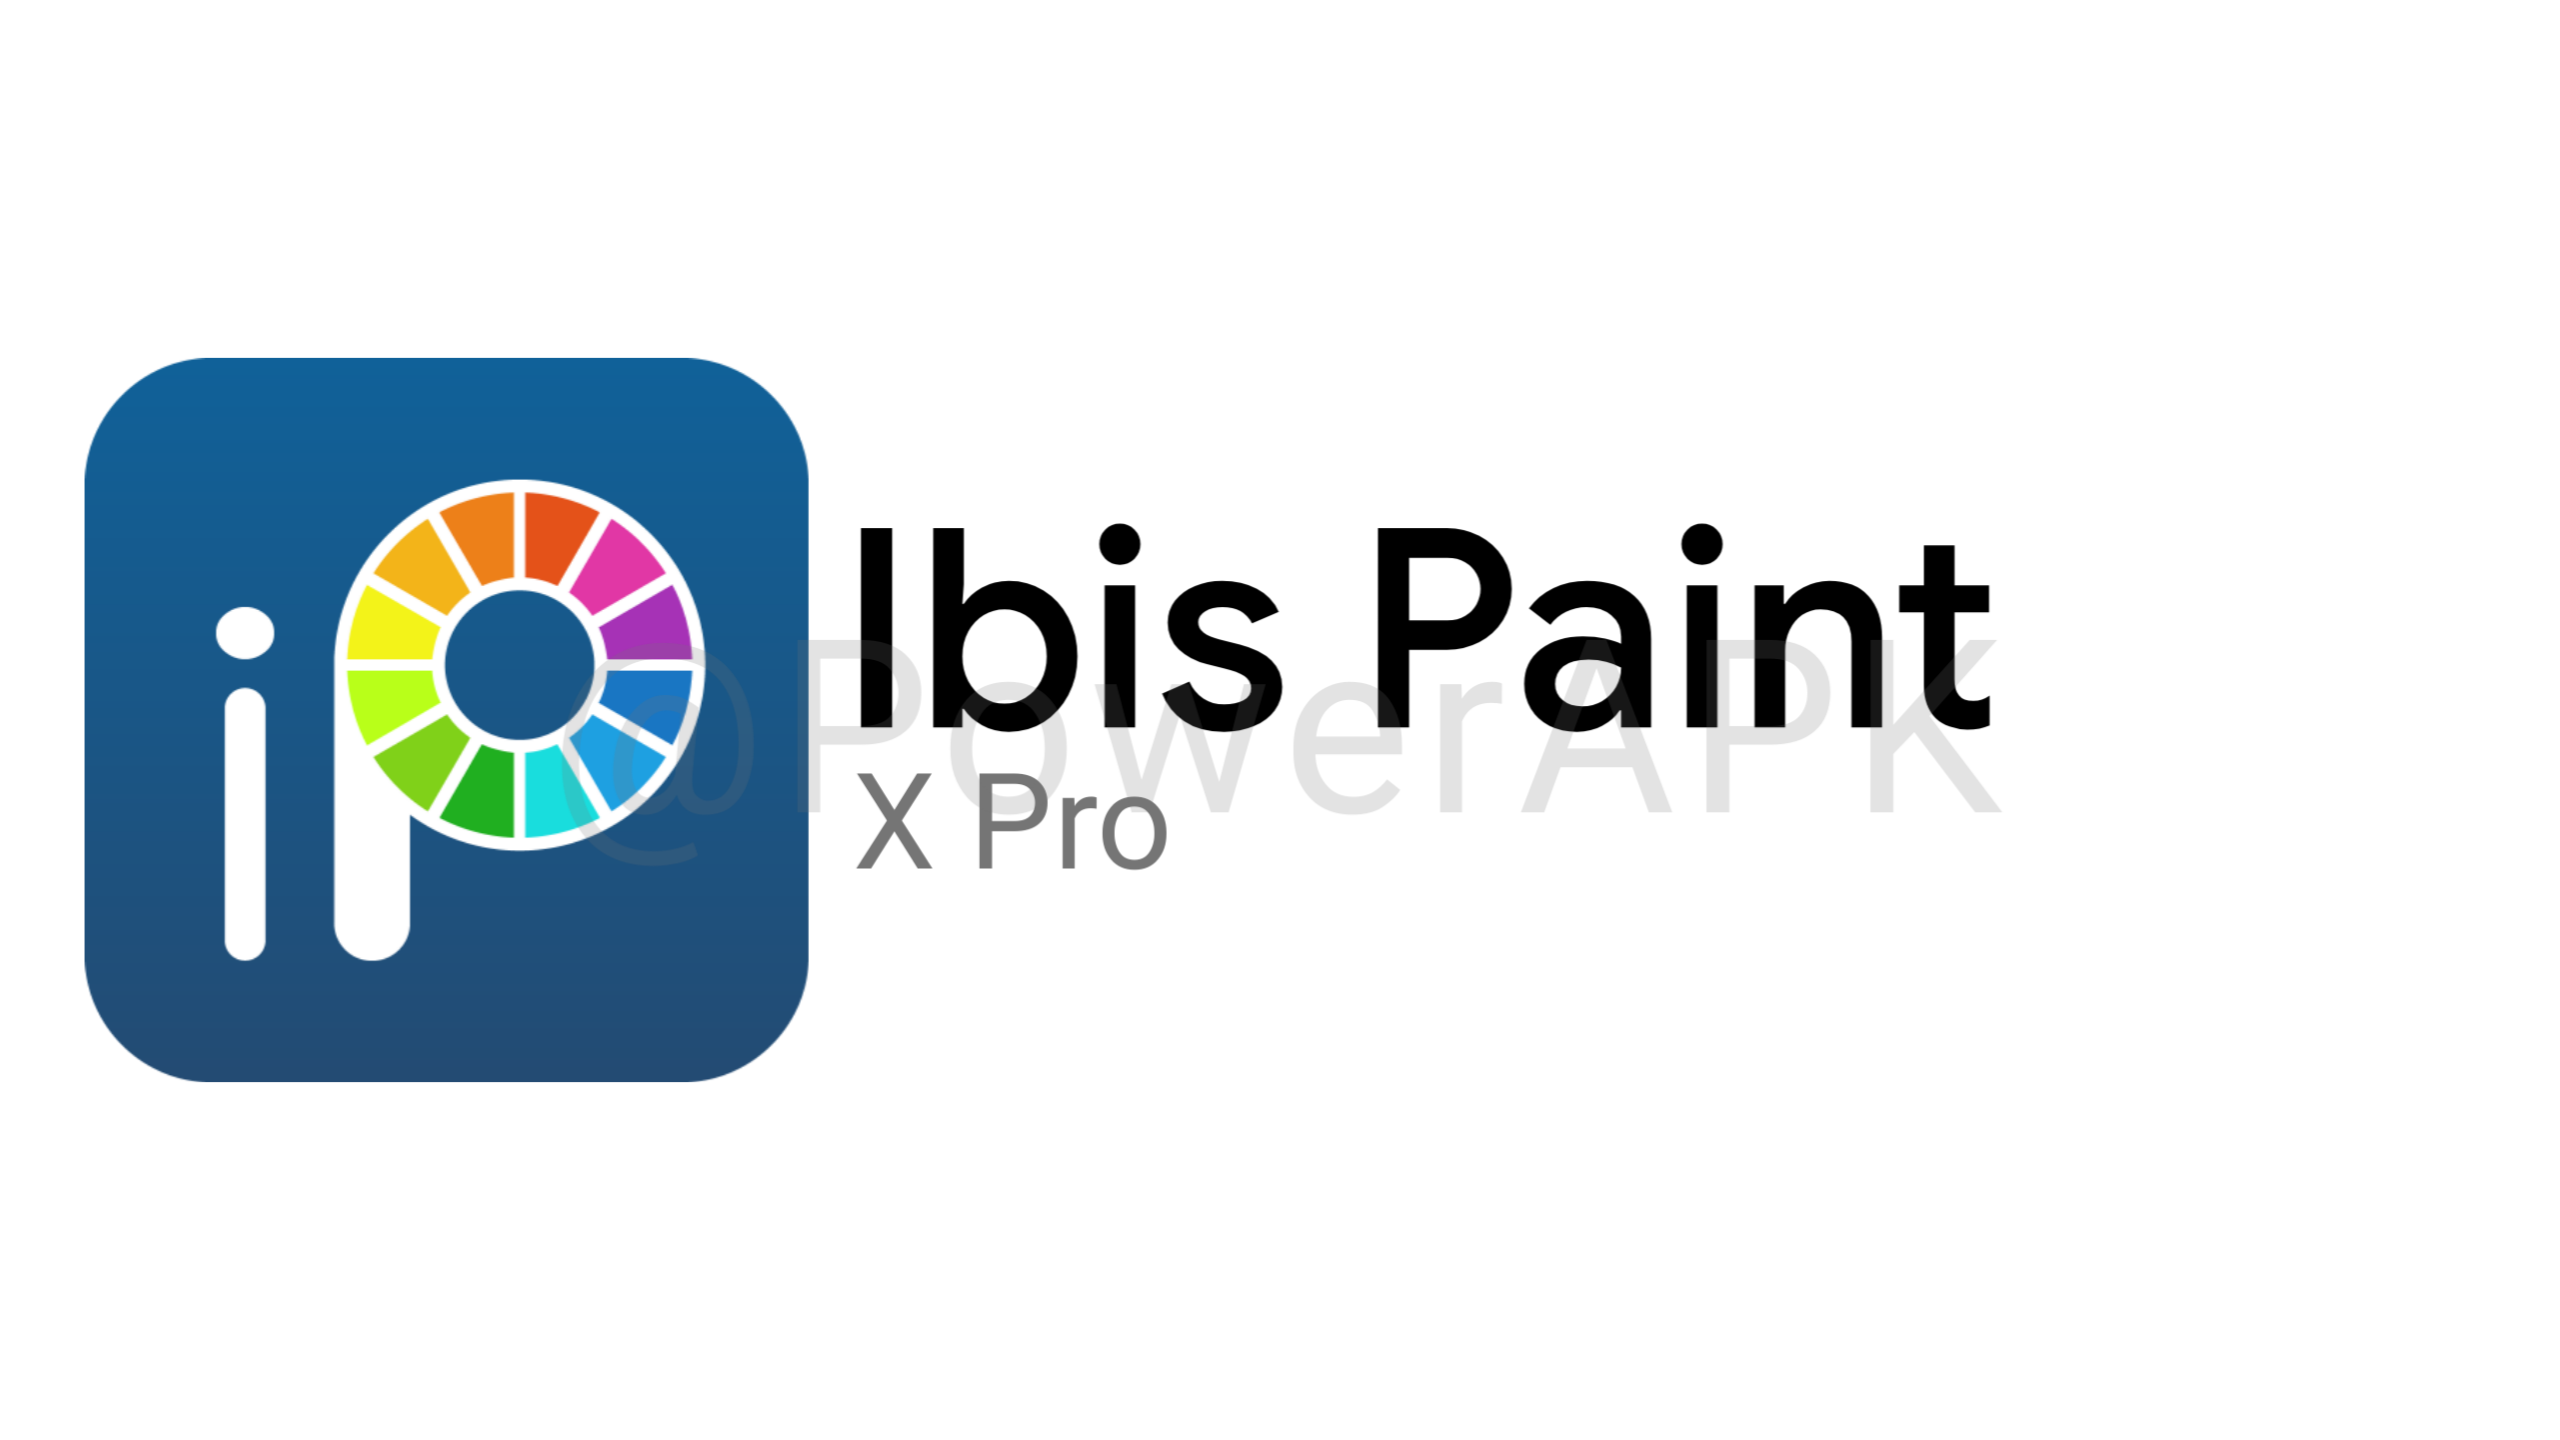 Ibis paint window. Фотографии приложения без Paint x. Ибис пейнт Икс в виде человека.